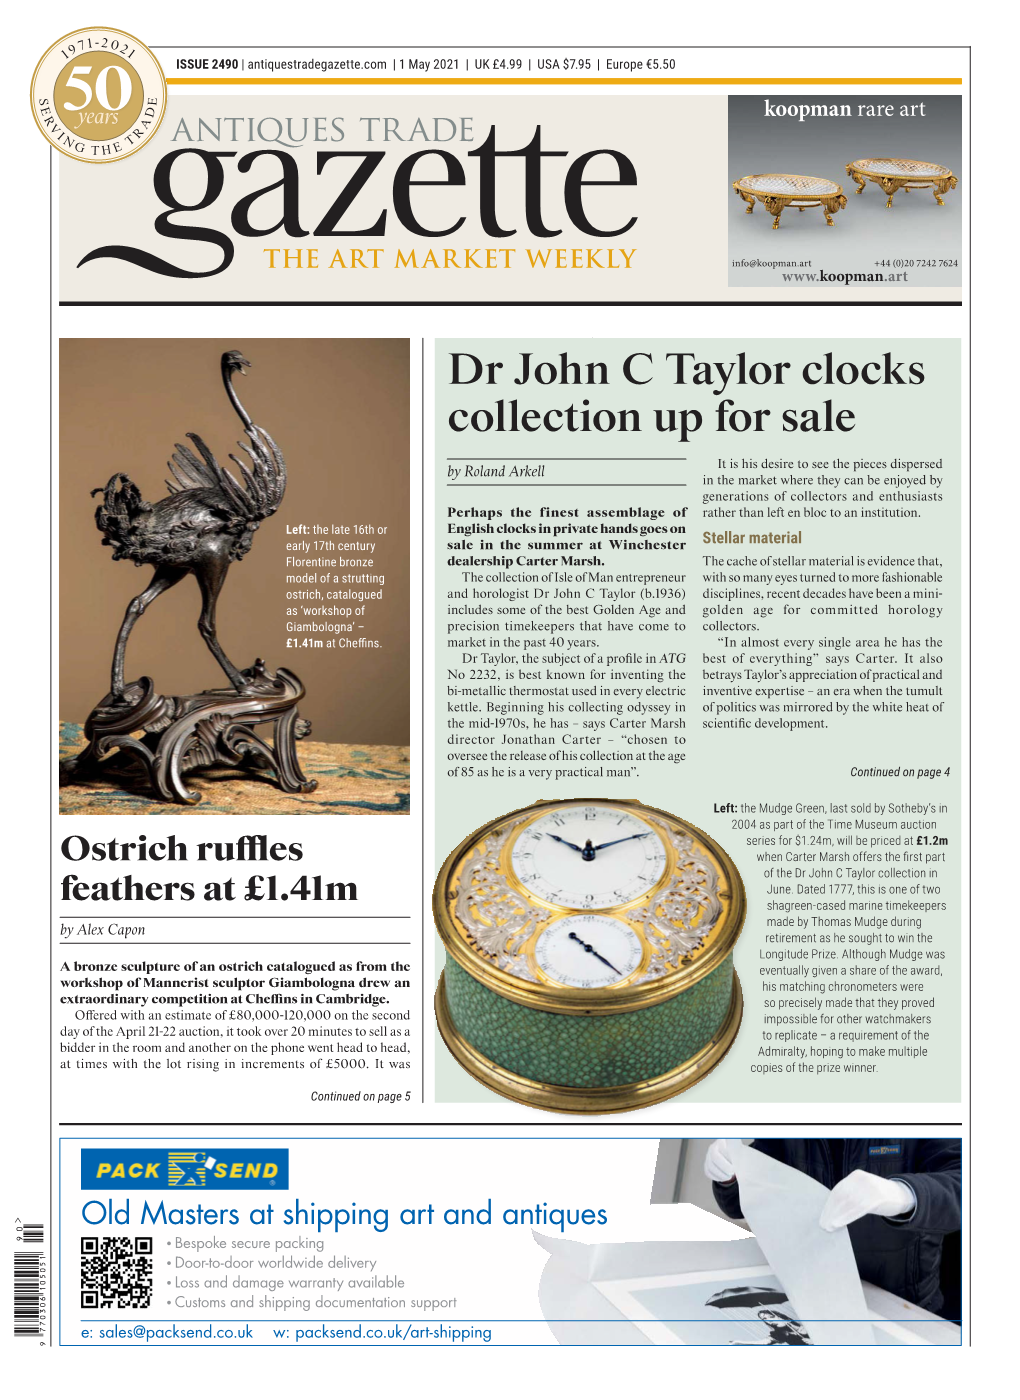 Dr John C Taylor Clocks Collection up for Sale